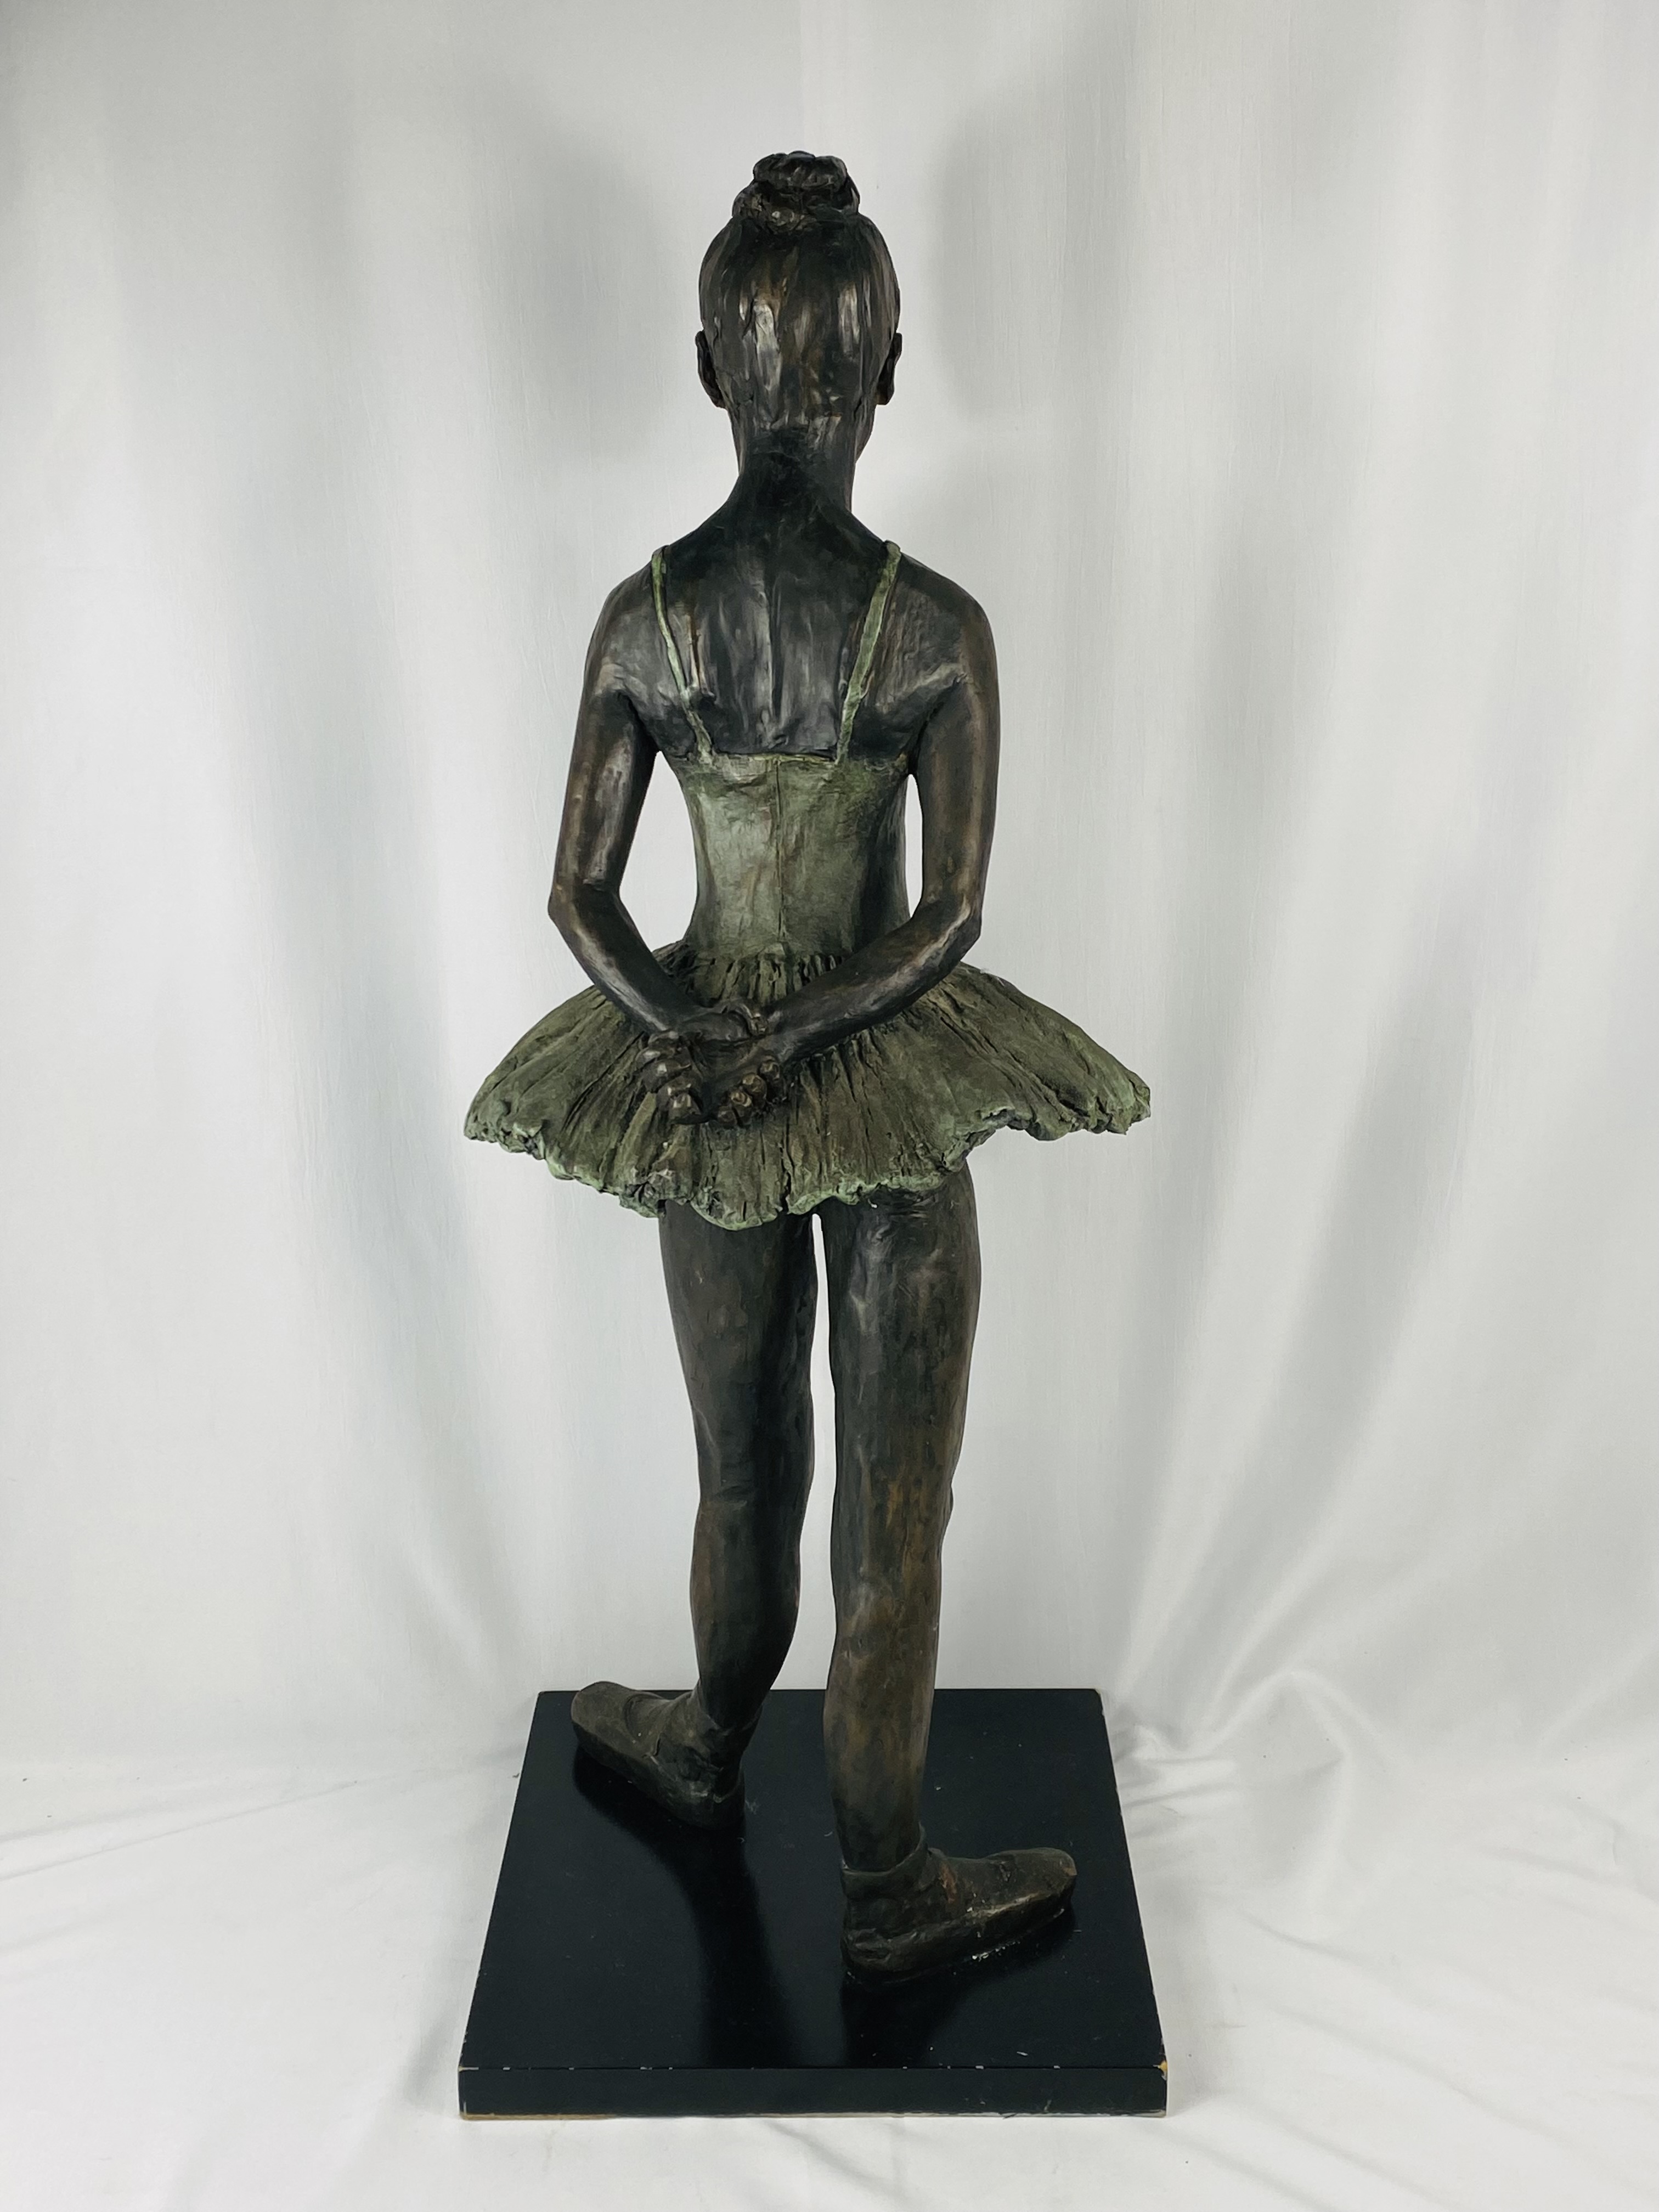 Resin model of a ballerina on a plinth base - Image 2 of 3